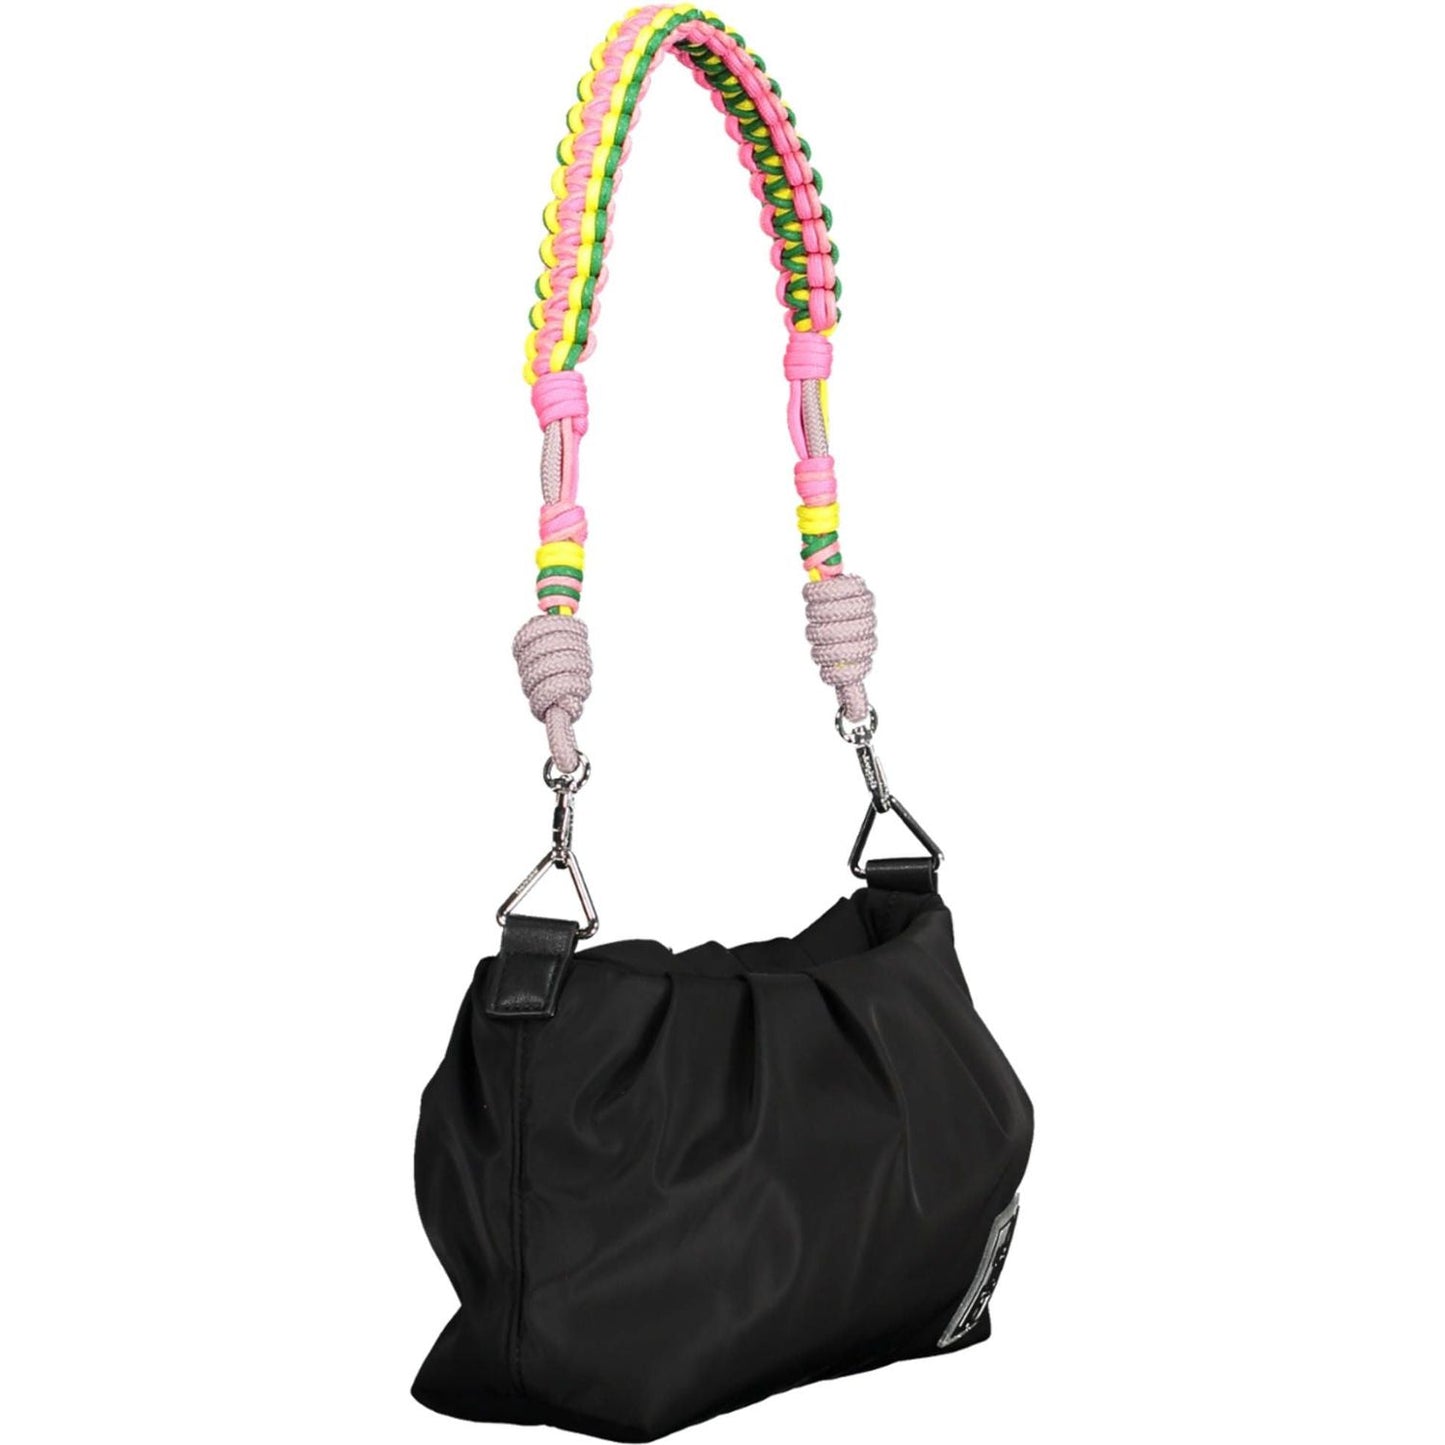 Desigual Chic Black Contrast Detail Handbag chic-black-contrast-detail-handbag